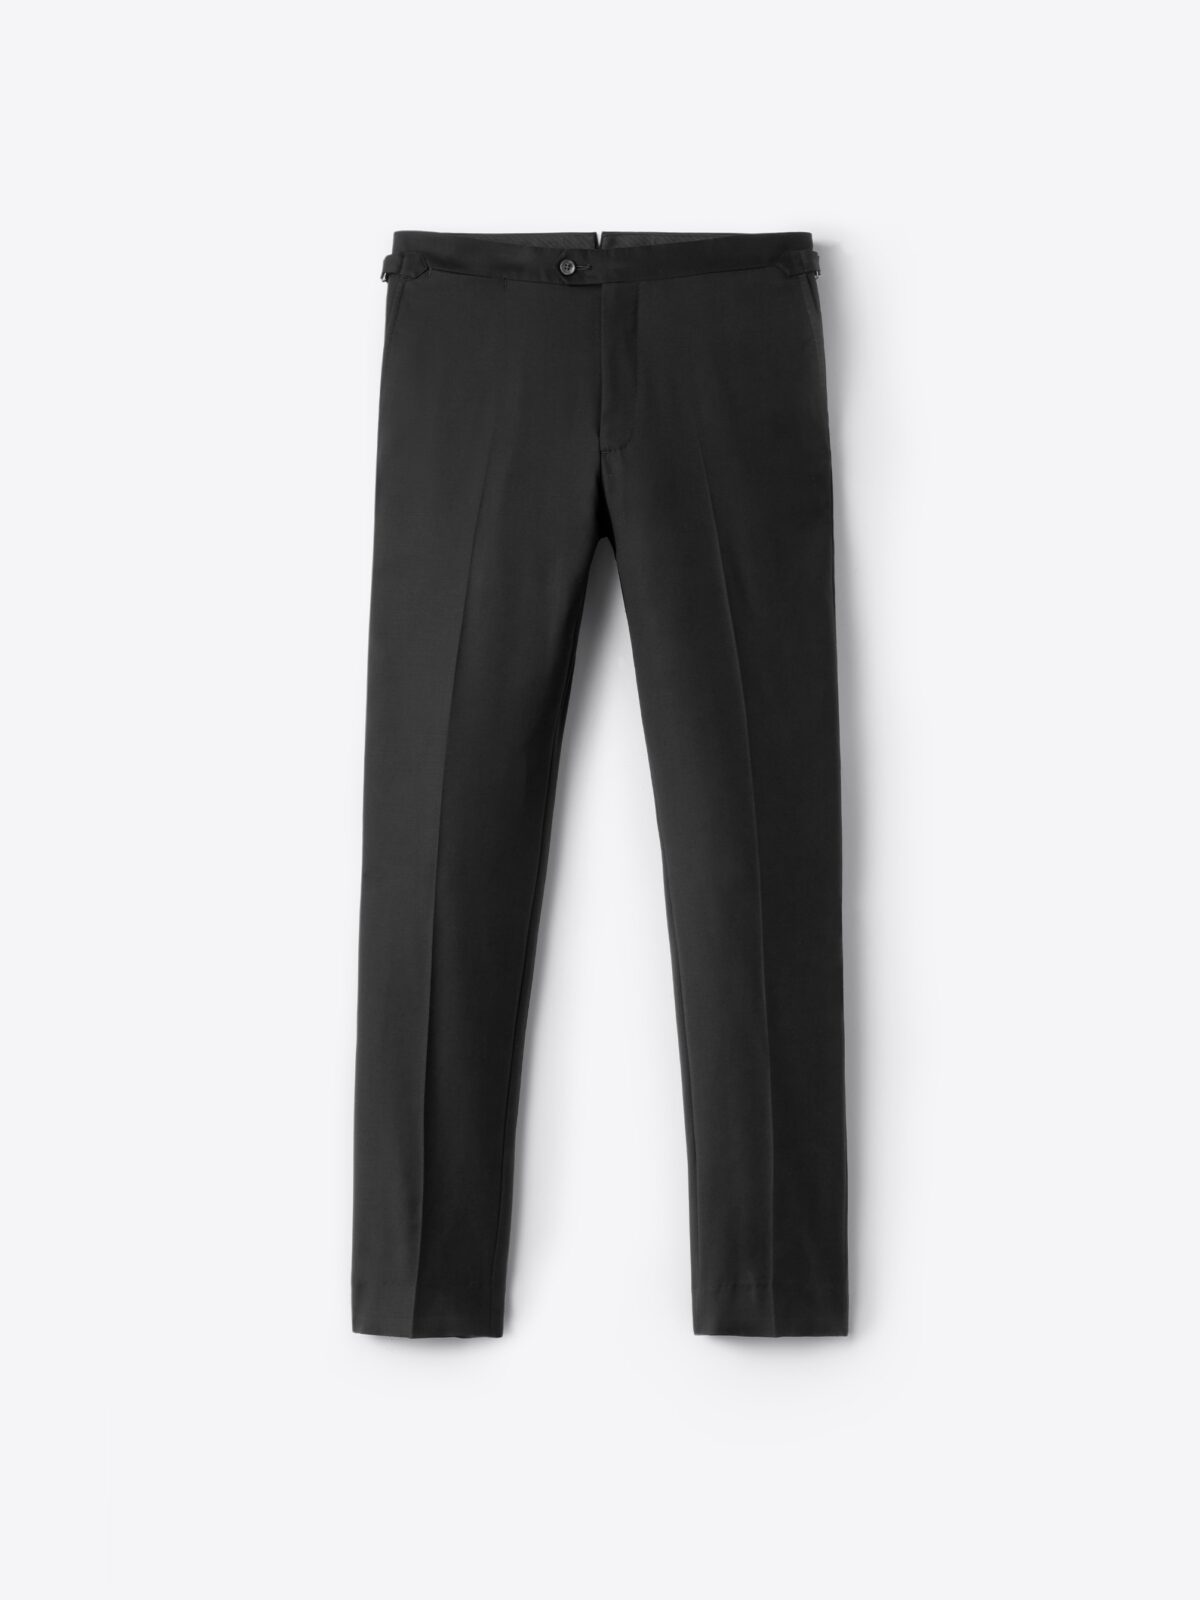 Black Wool Side Tab Dress Pant - Custom Fit Tailored Clothing